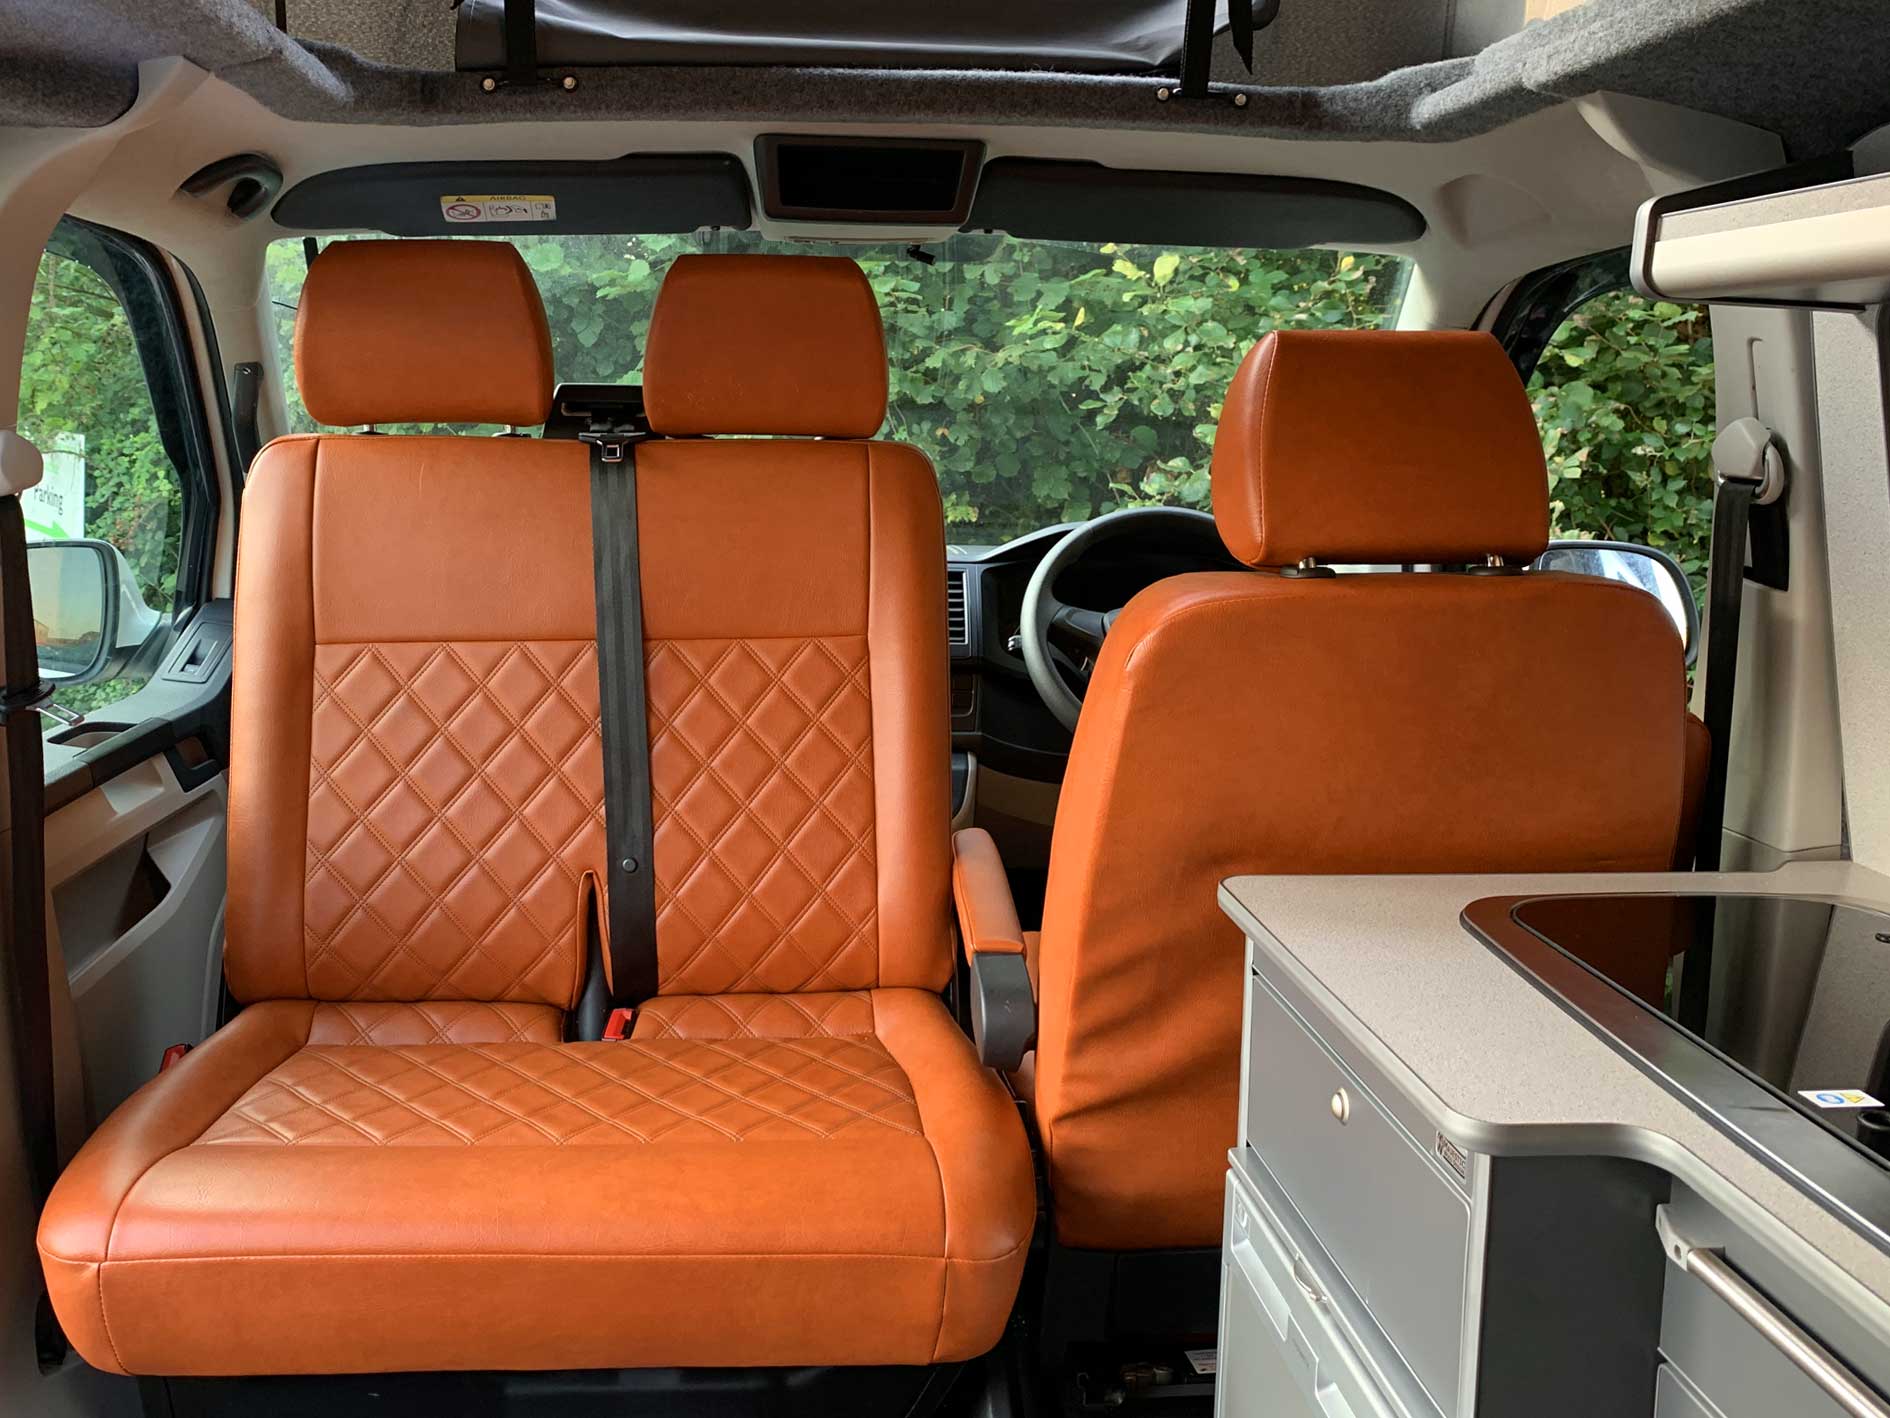 Orange seats upholstery in campervan